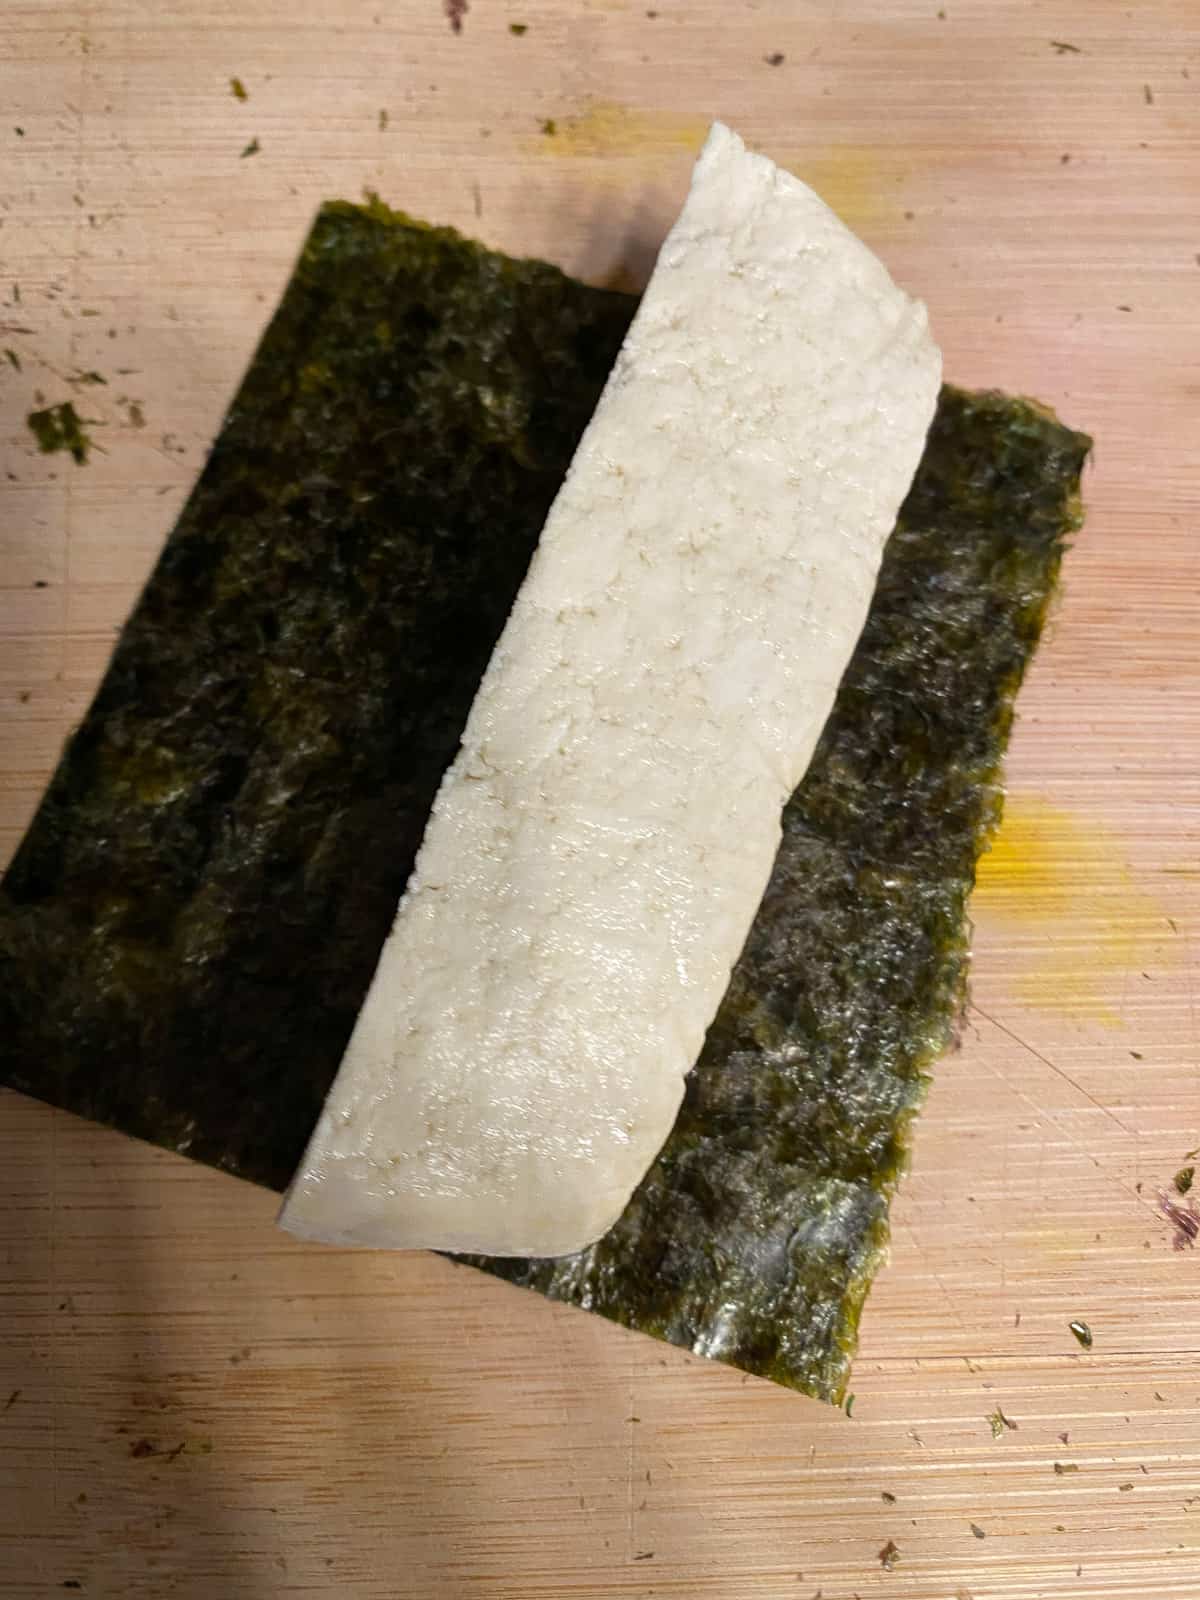 process shot of adding tofu to nori sheet